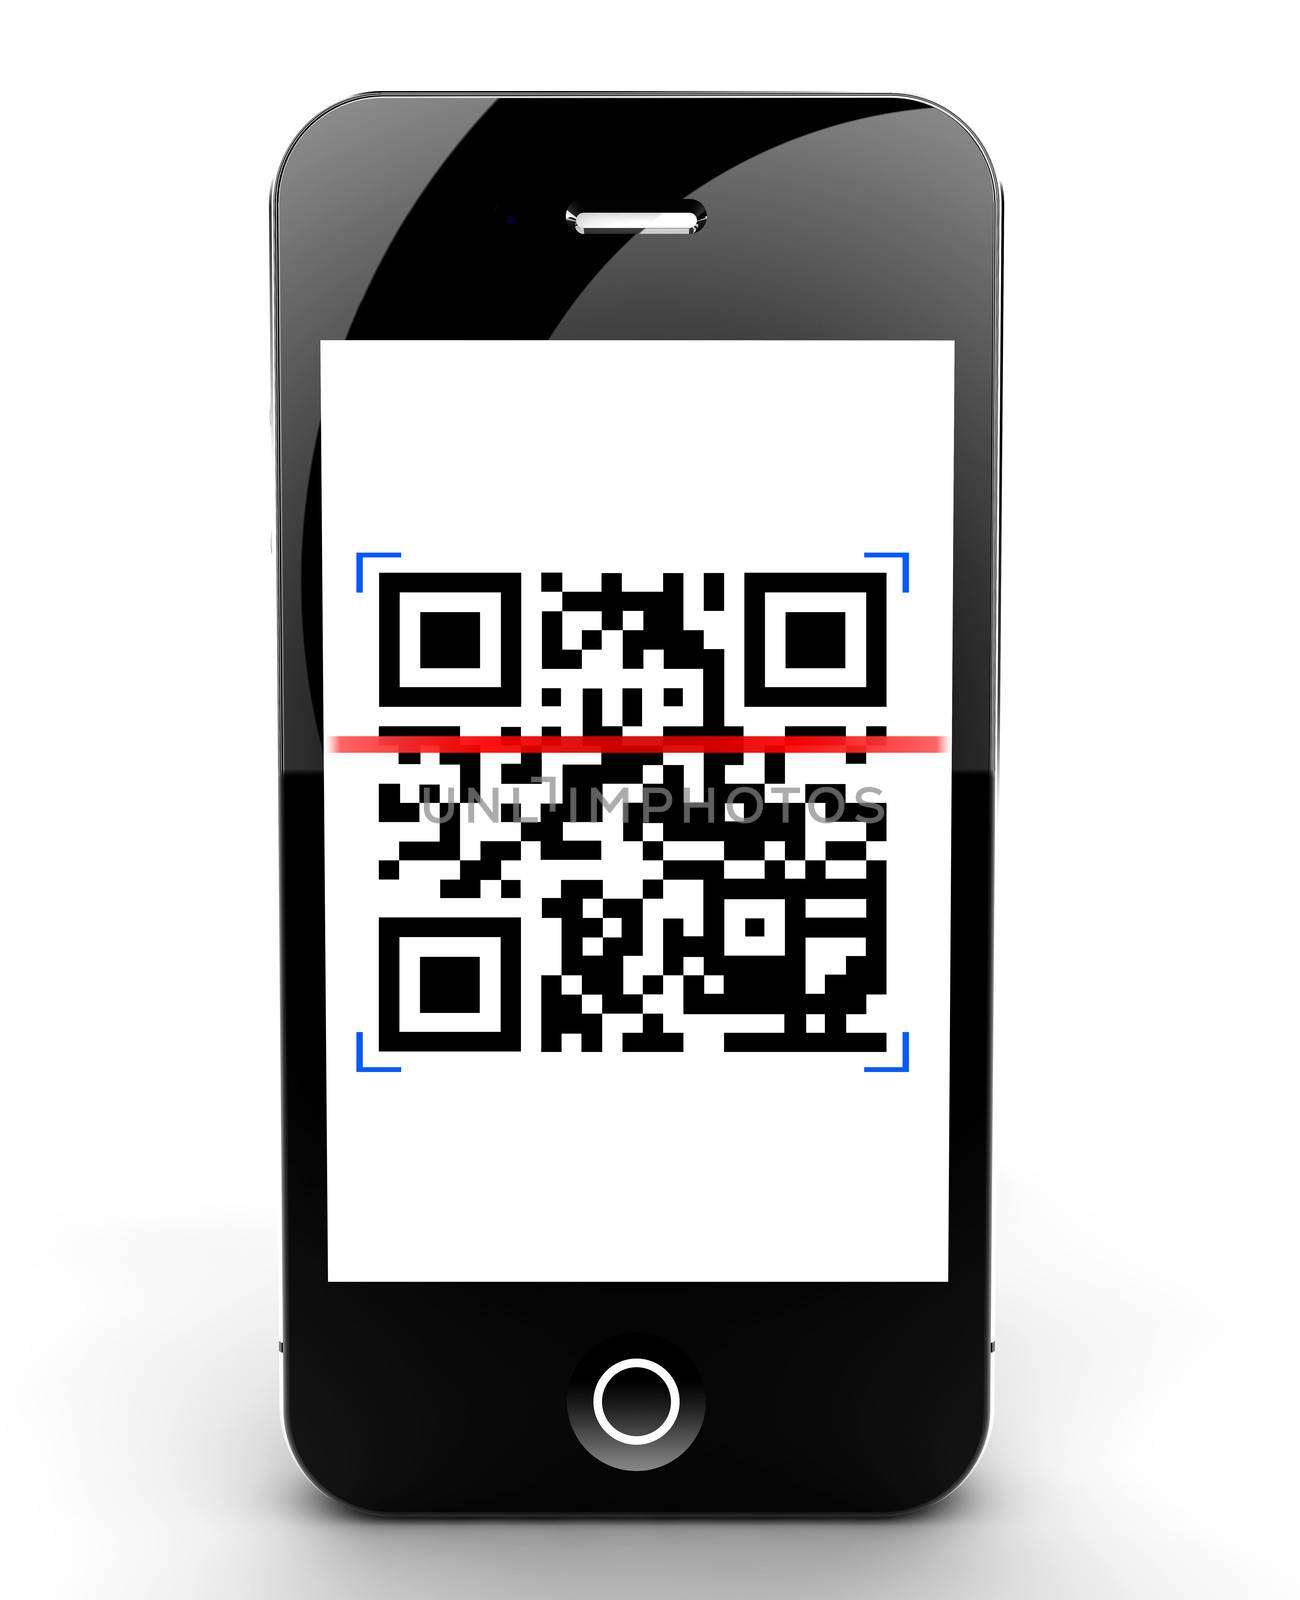 Illustration of a smartphone scanning a QR code